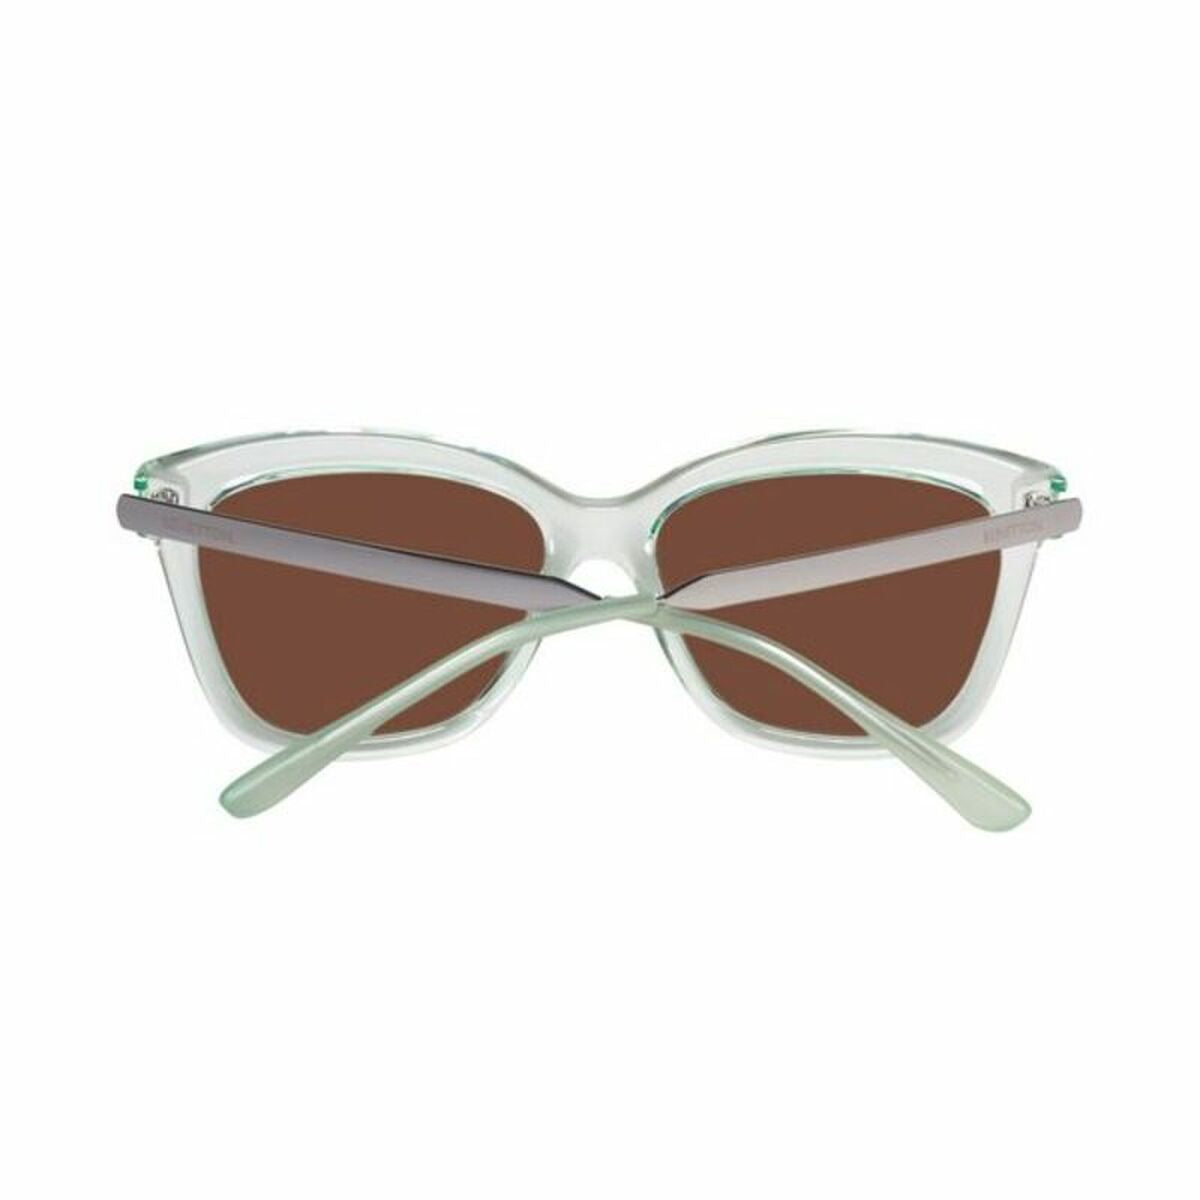 Ladies'Sunglasses Benetton